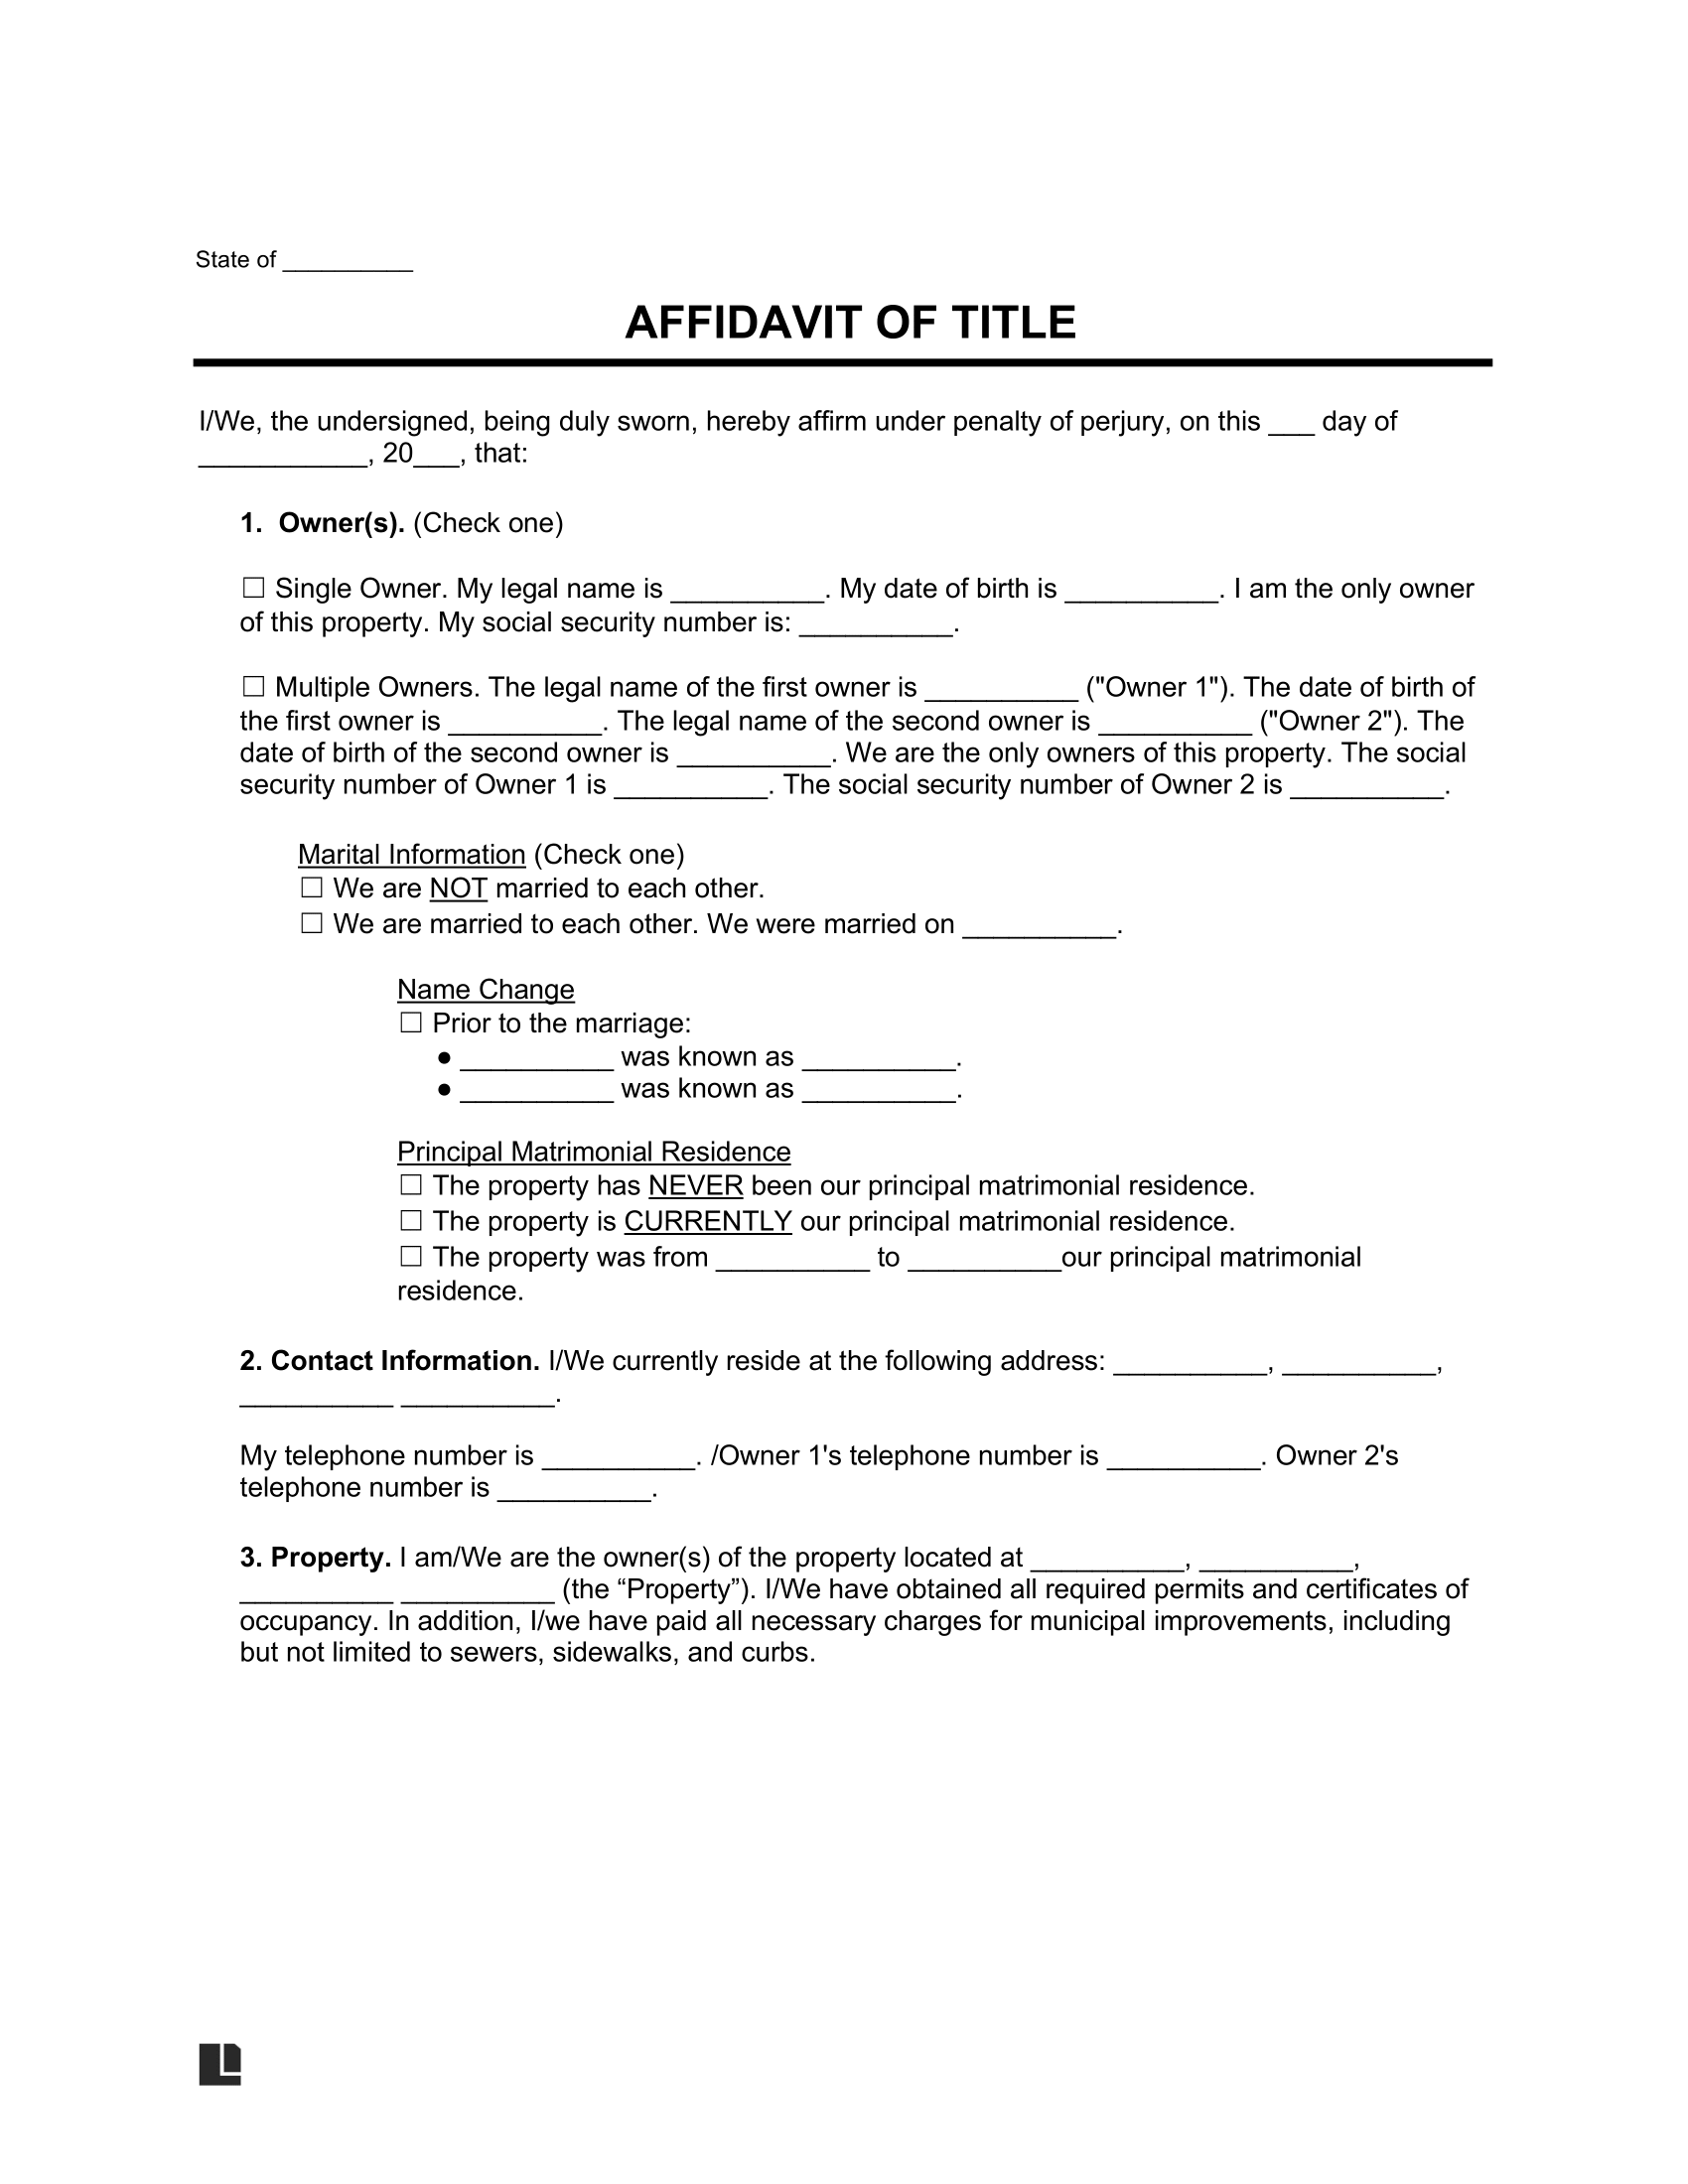 affidavit of title